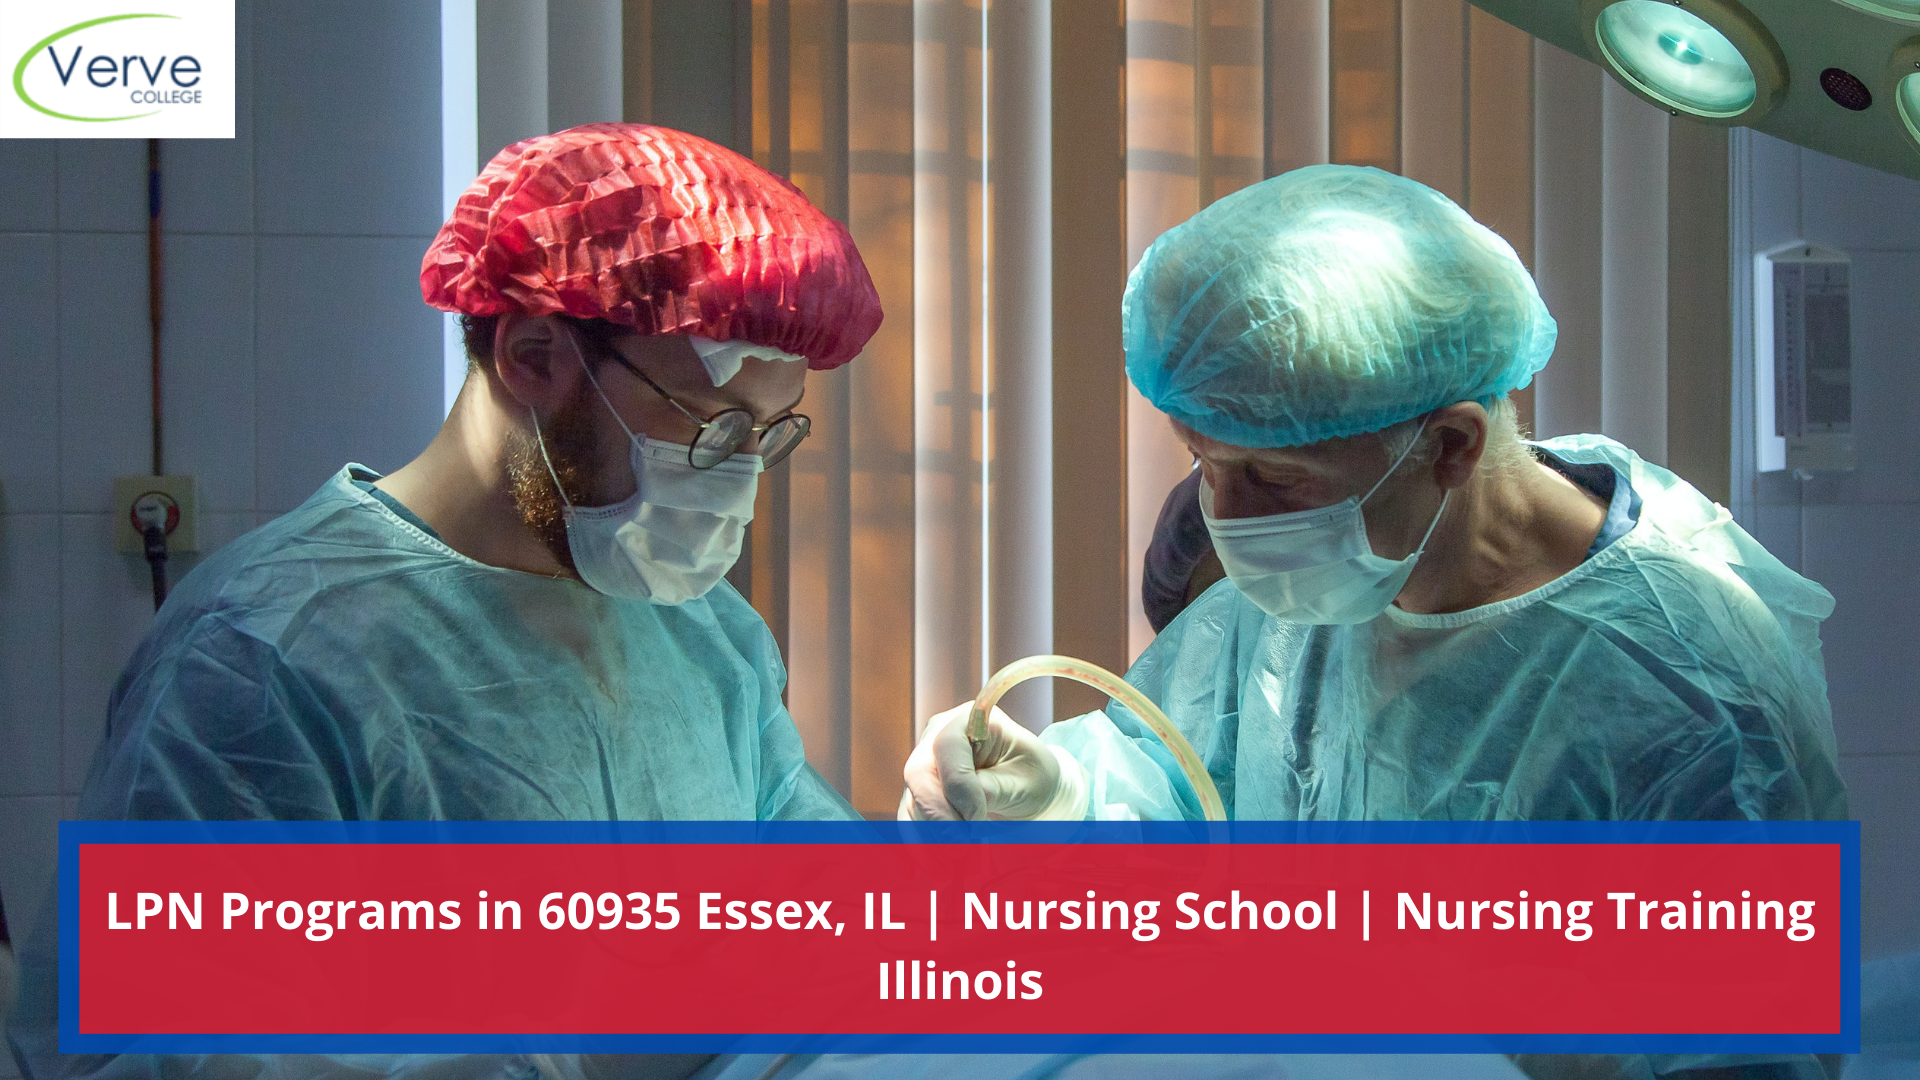 LPN Programs in 60935 Essex, IL | Nursing School | Nursing Training Illinois